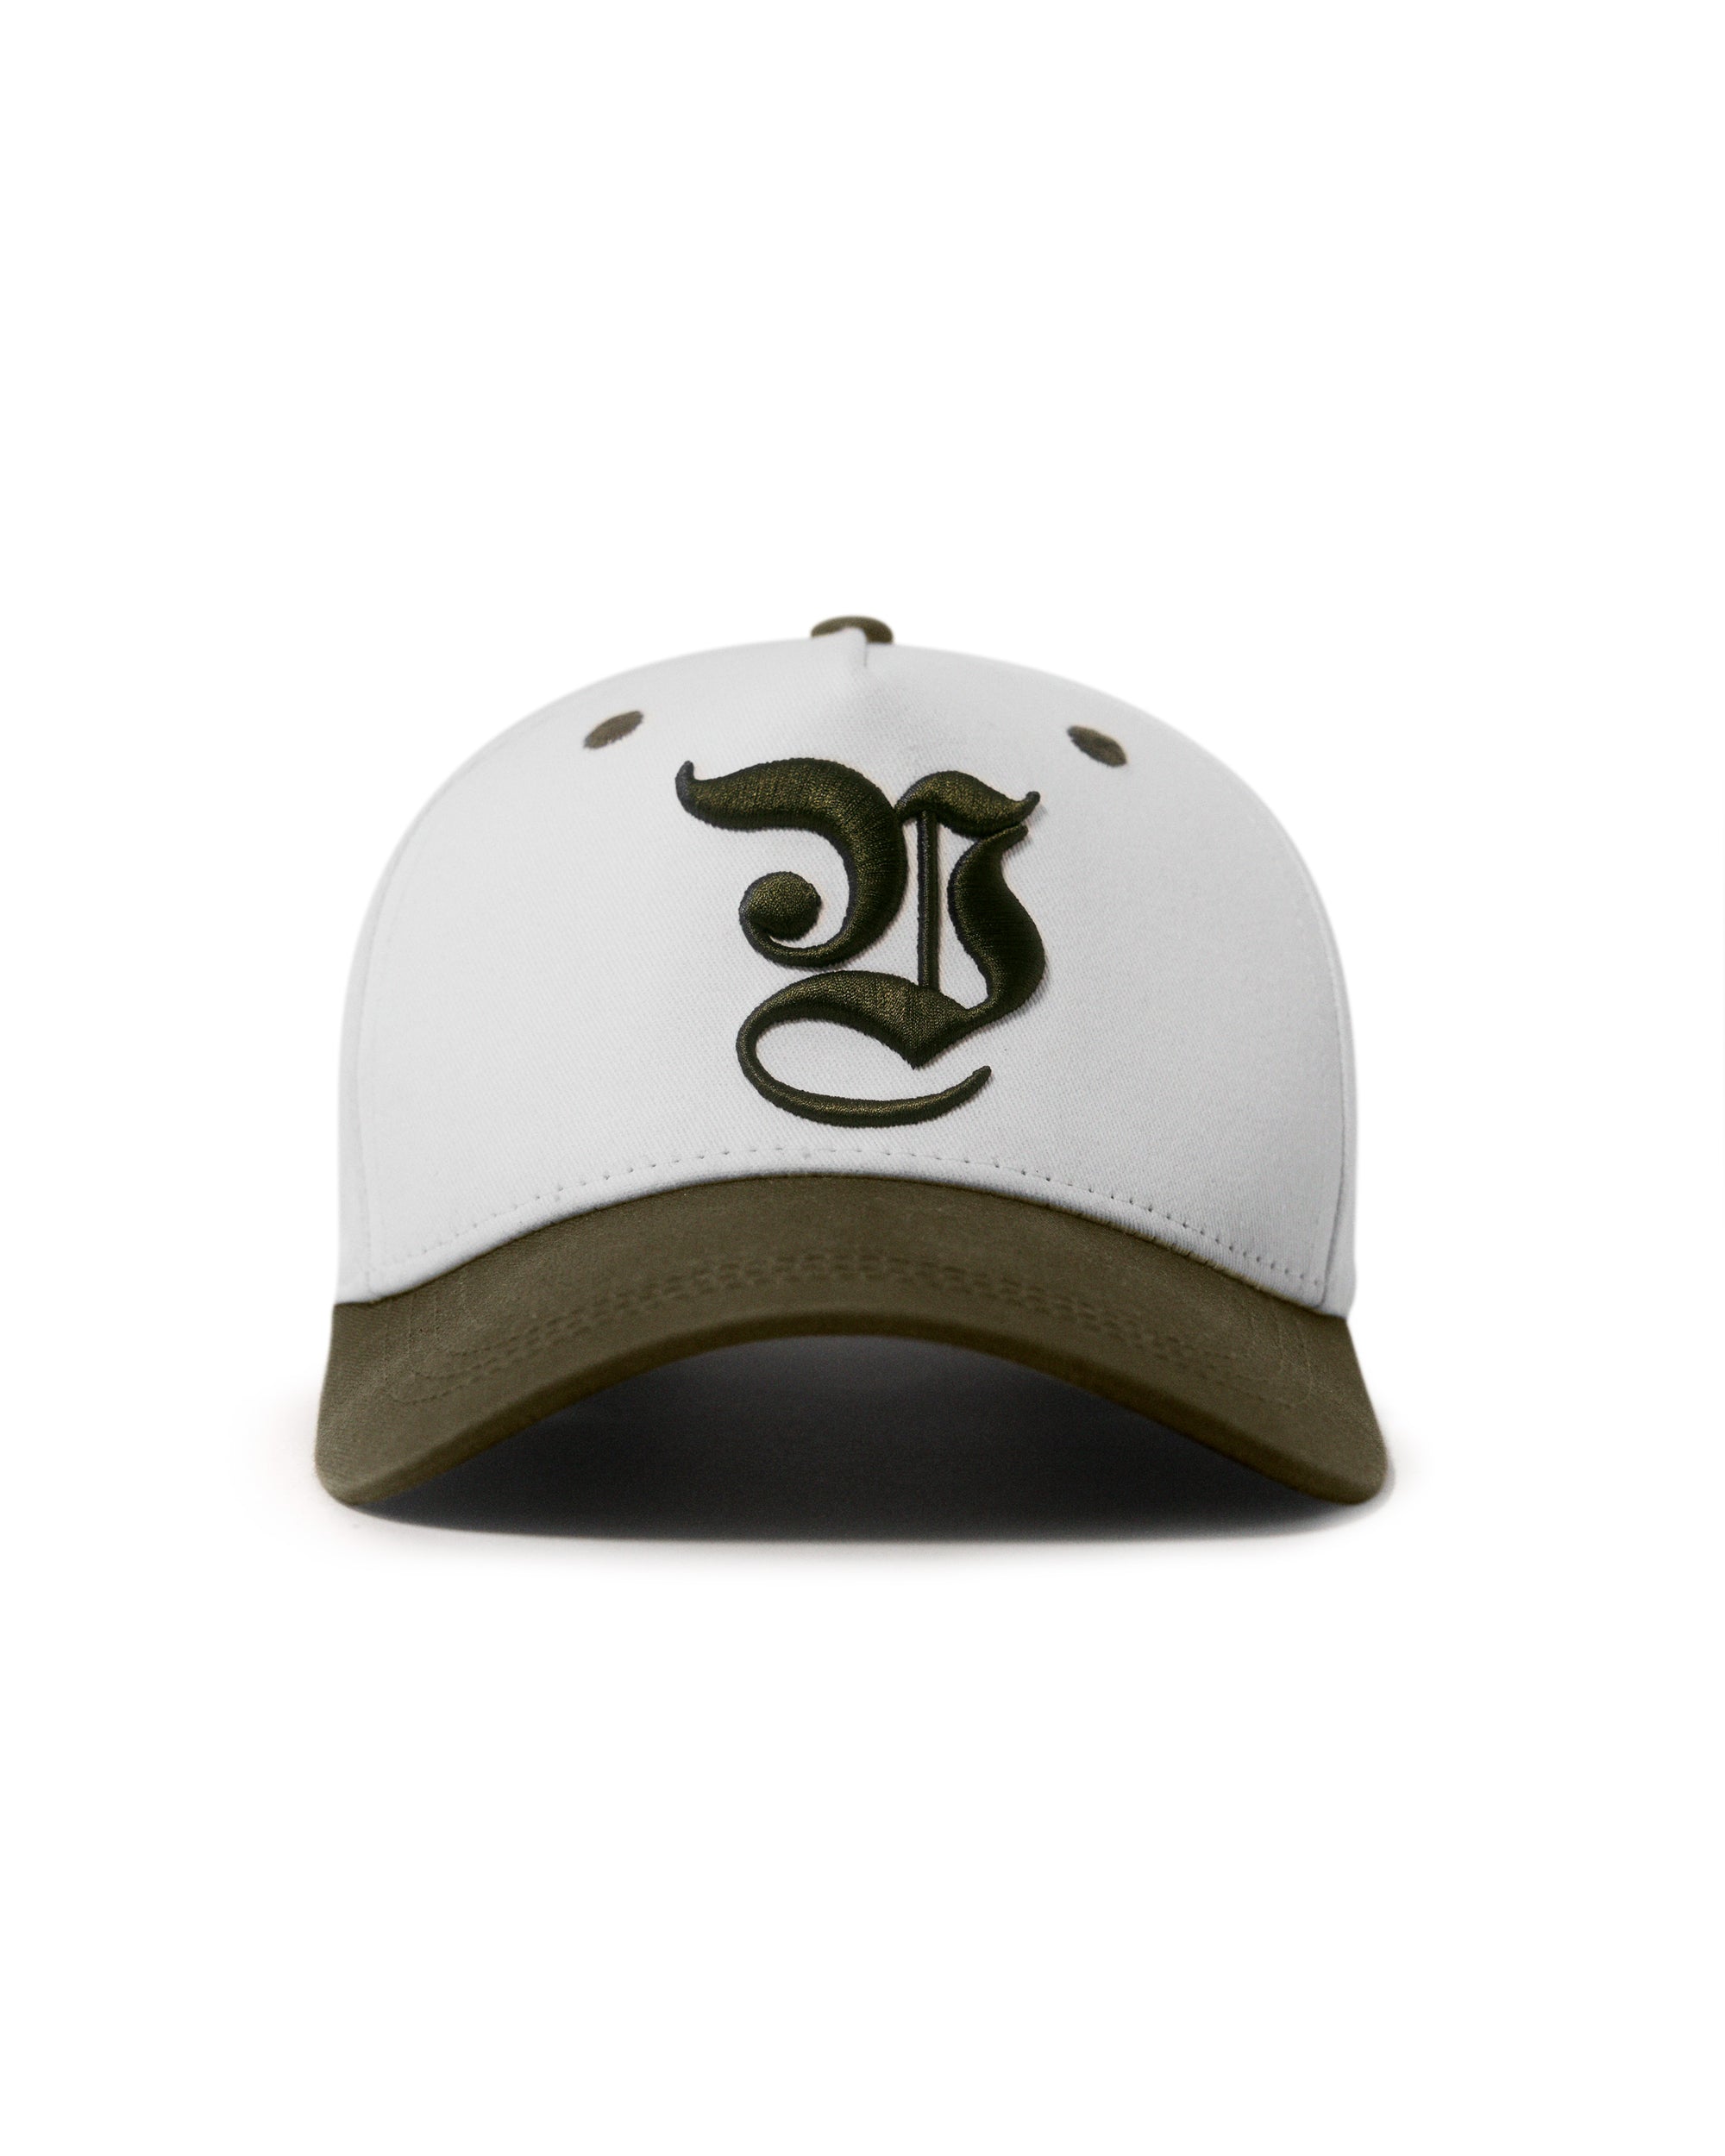 "Initiale" olive baseball cap